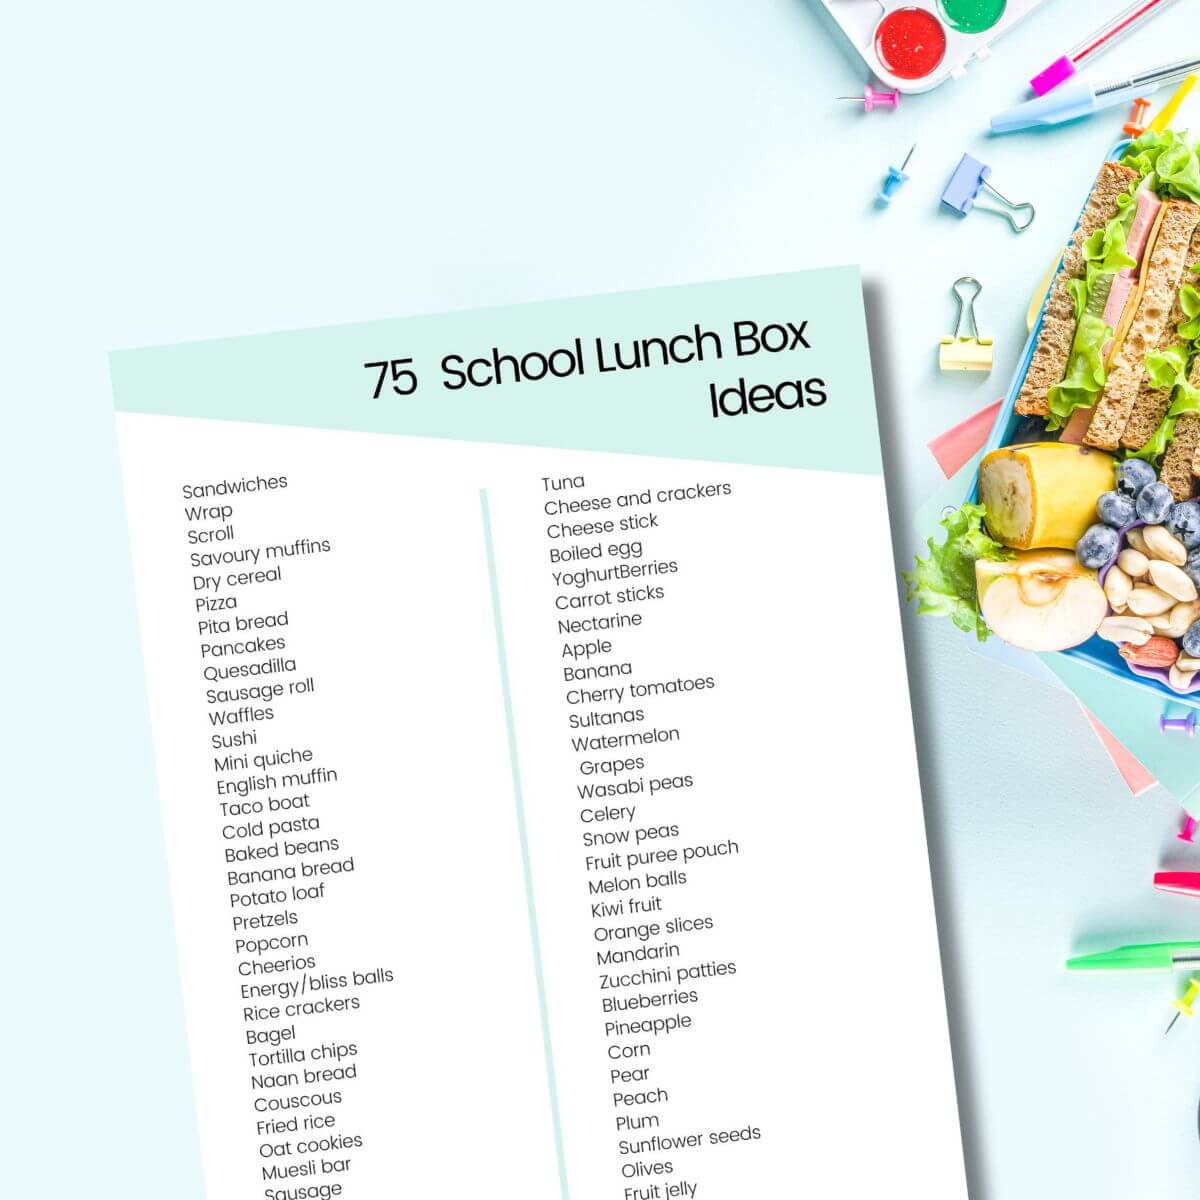 Free printable lunch box ideas list.